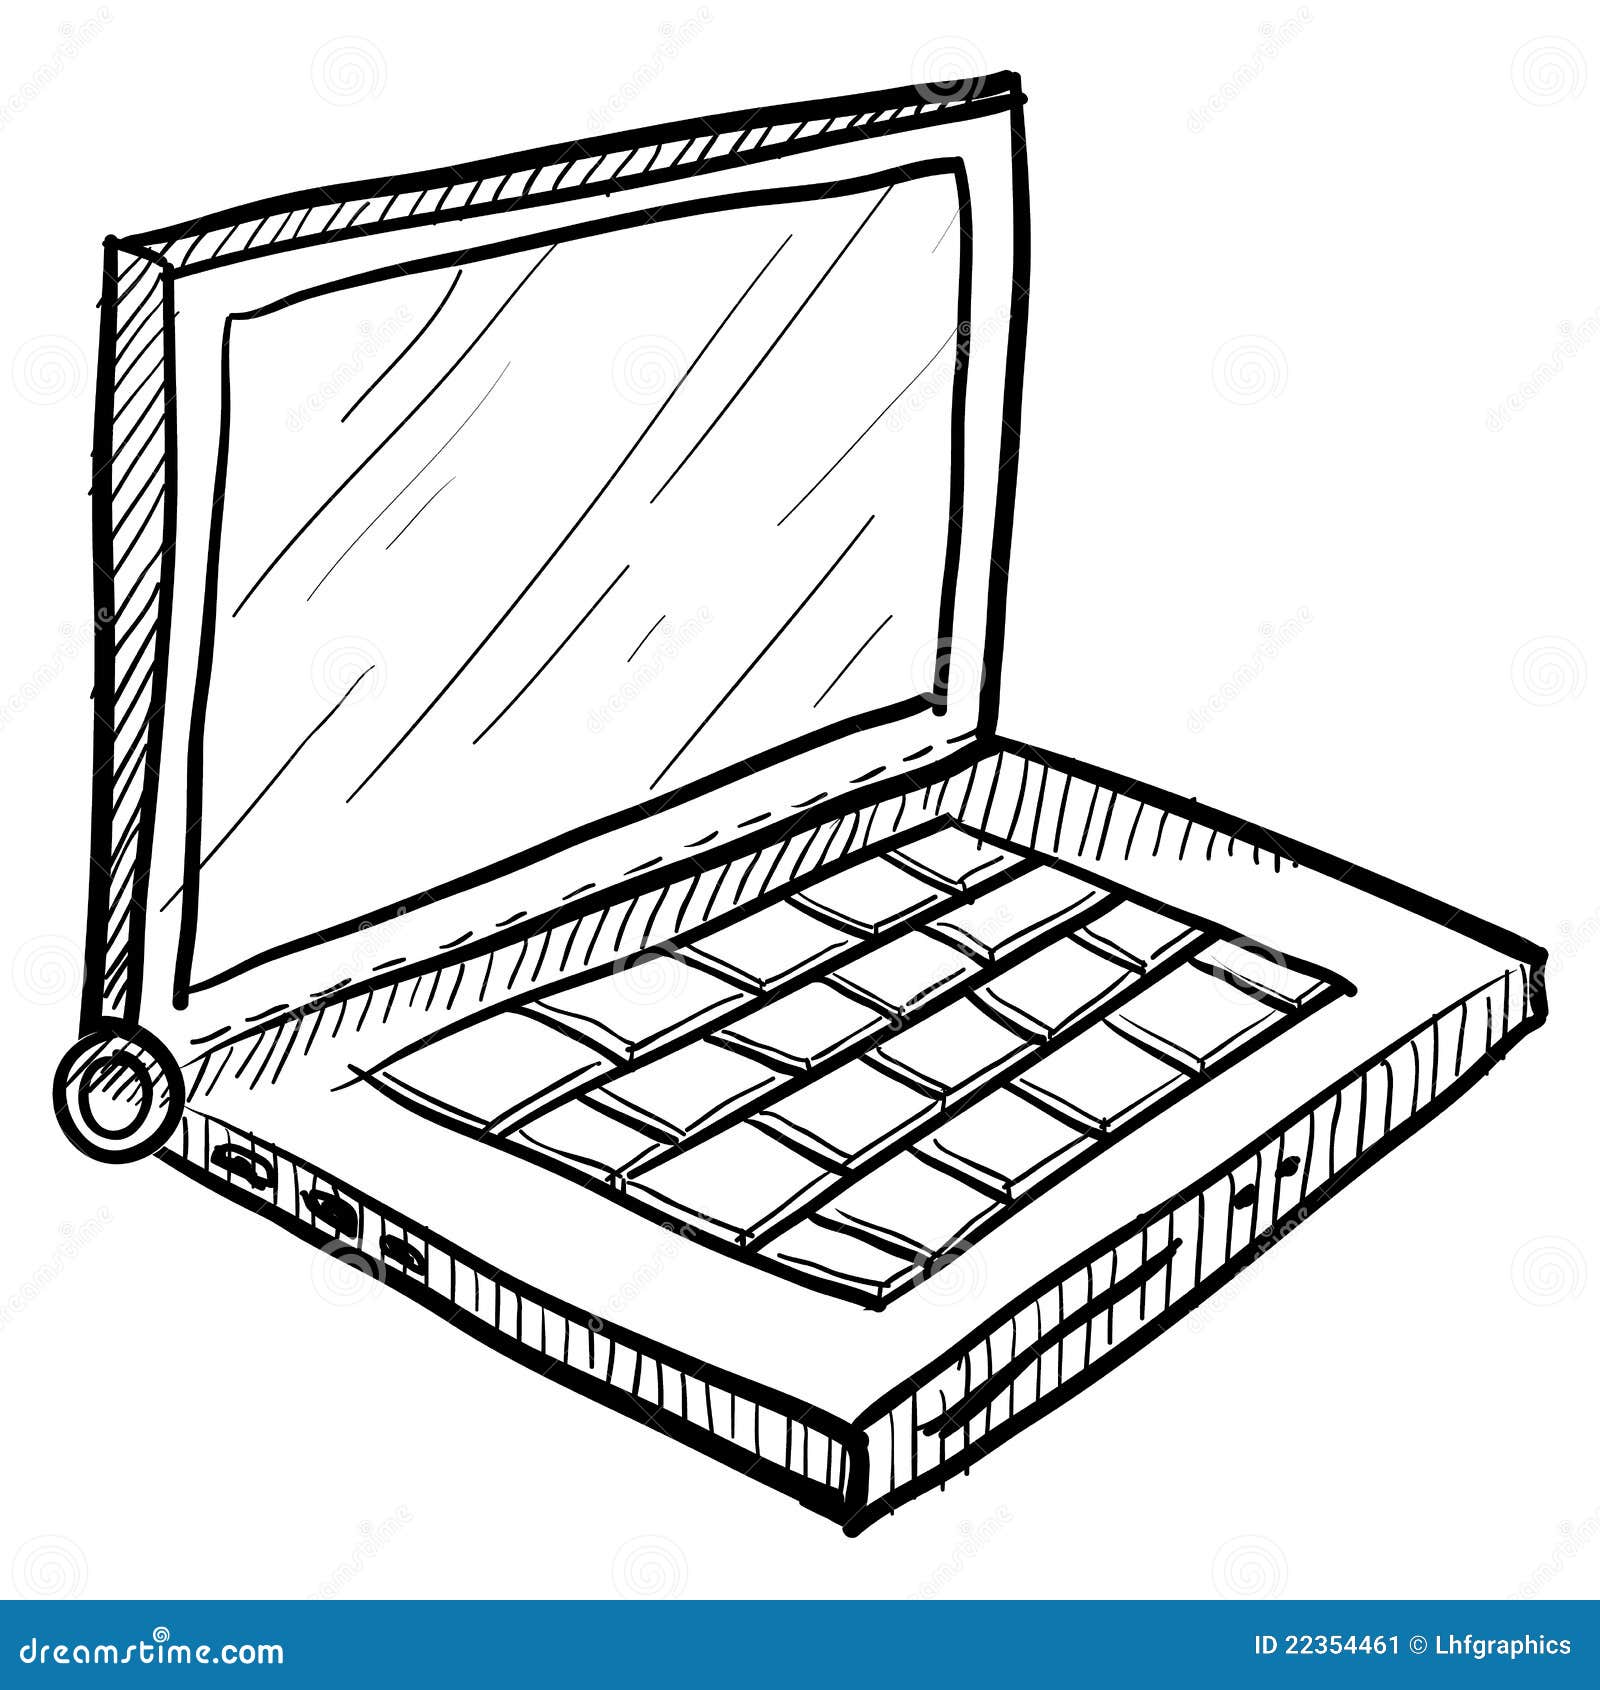 Laptop Computer Sketch Stock Image - Image: 22354461